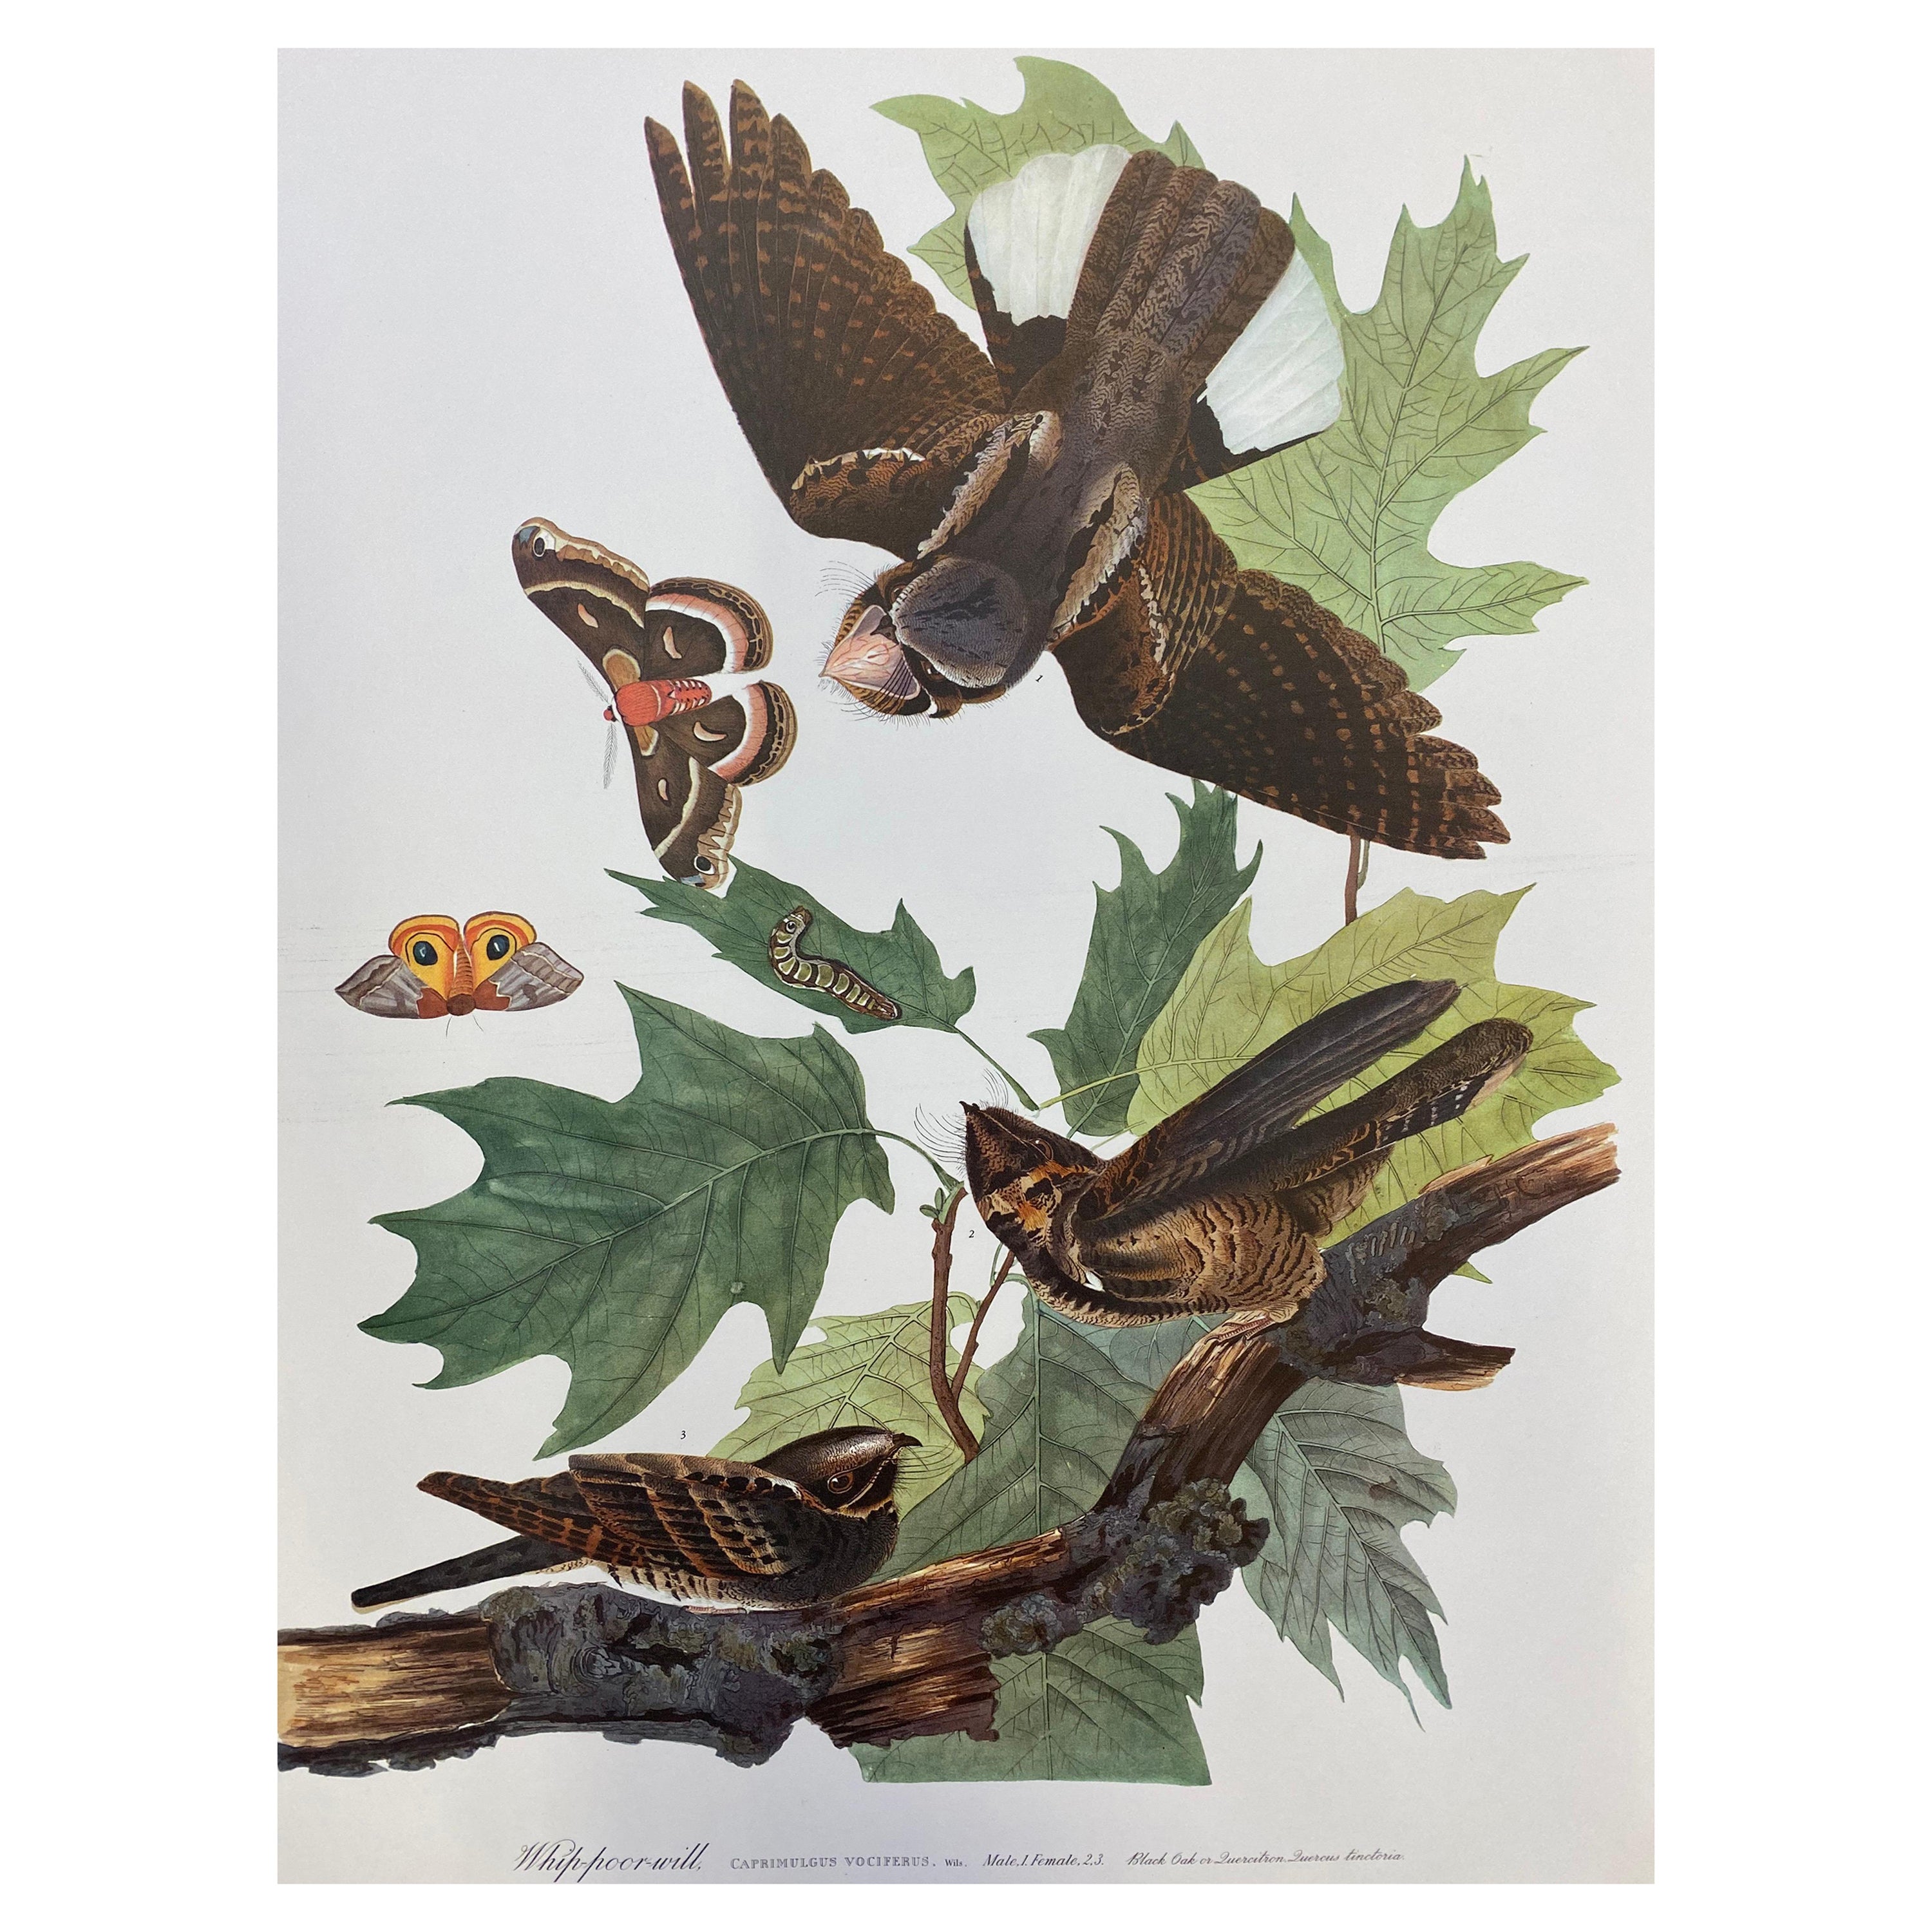 Großer klassischer Vogel-Farbdruck nach John James Audubon, Brauner Pelikan